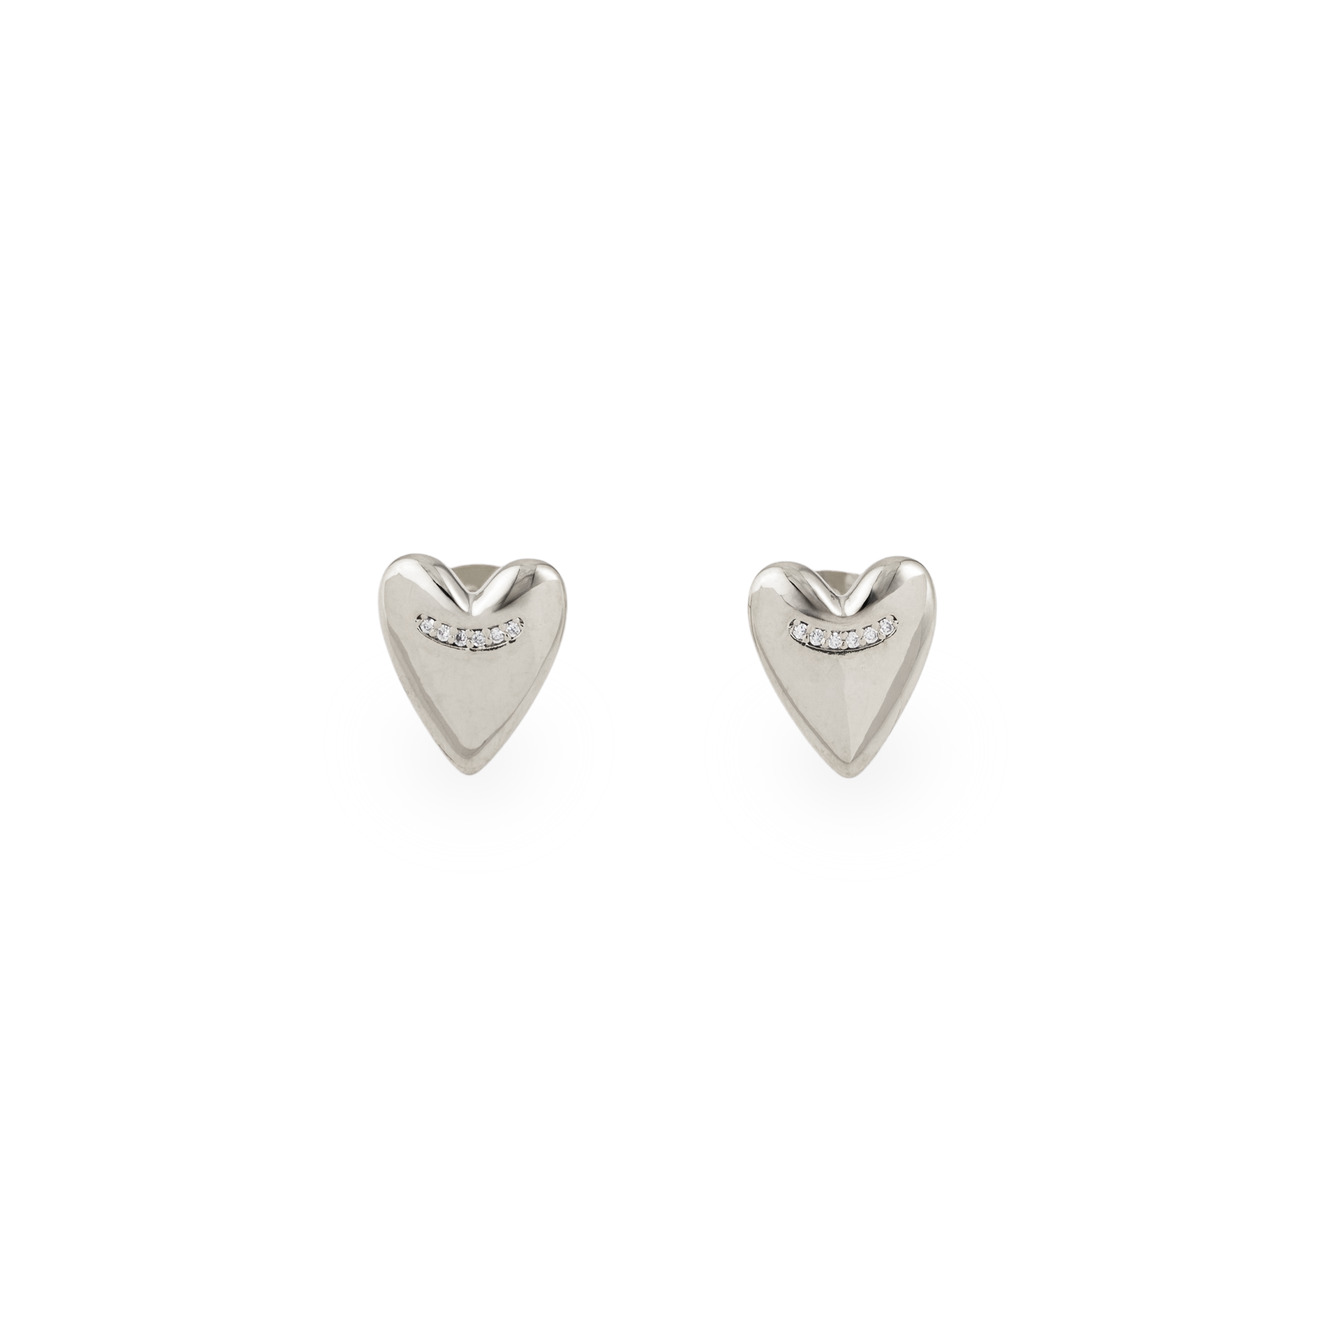 Free Form Jewelry Серебристые серьги-сердца с маленькими кристаллами цена и фото